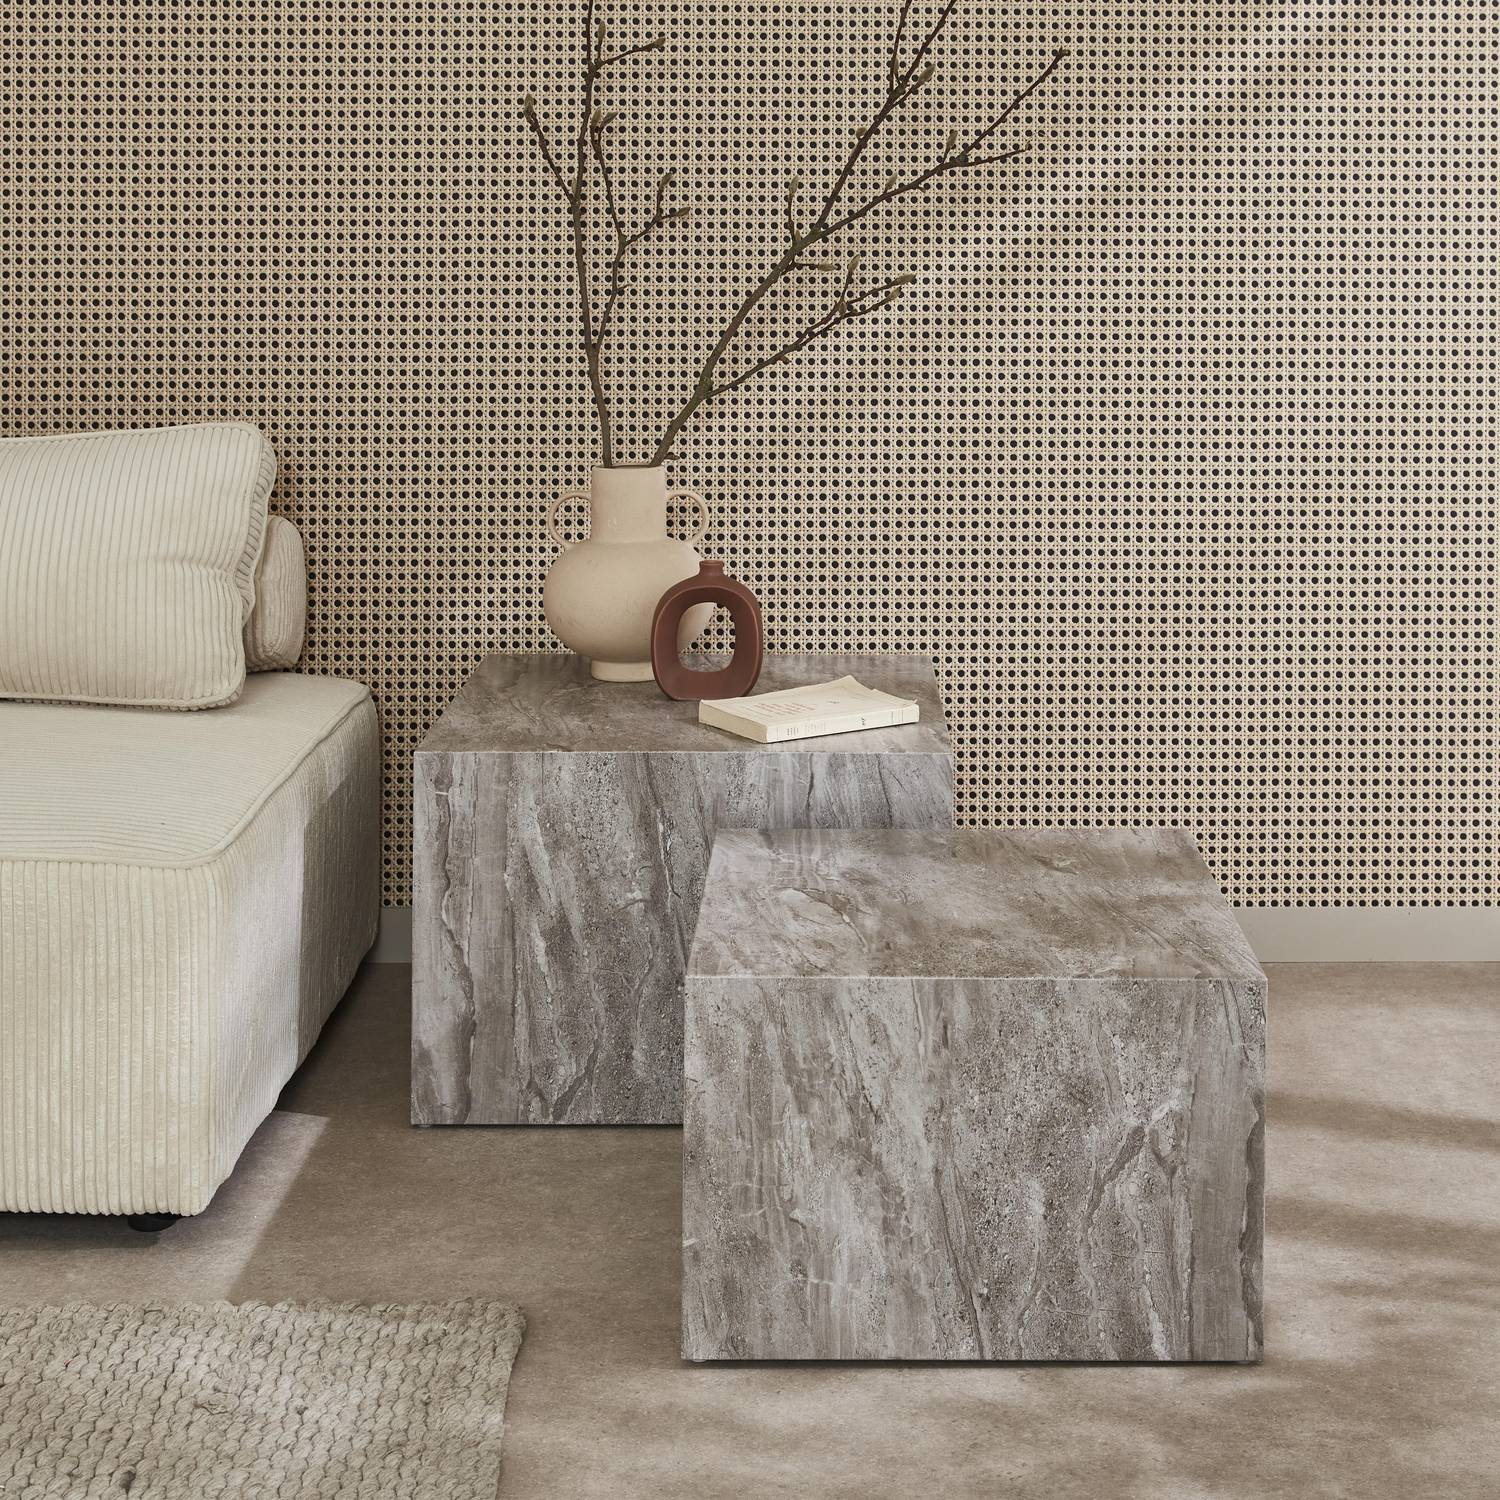 Set van 2 grijze salontafels met marmereffect, Paros, L 58 x B 58 x H 40cm / L 50 x B 50 x H 33cm Photo1